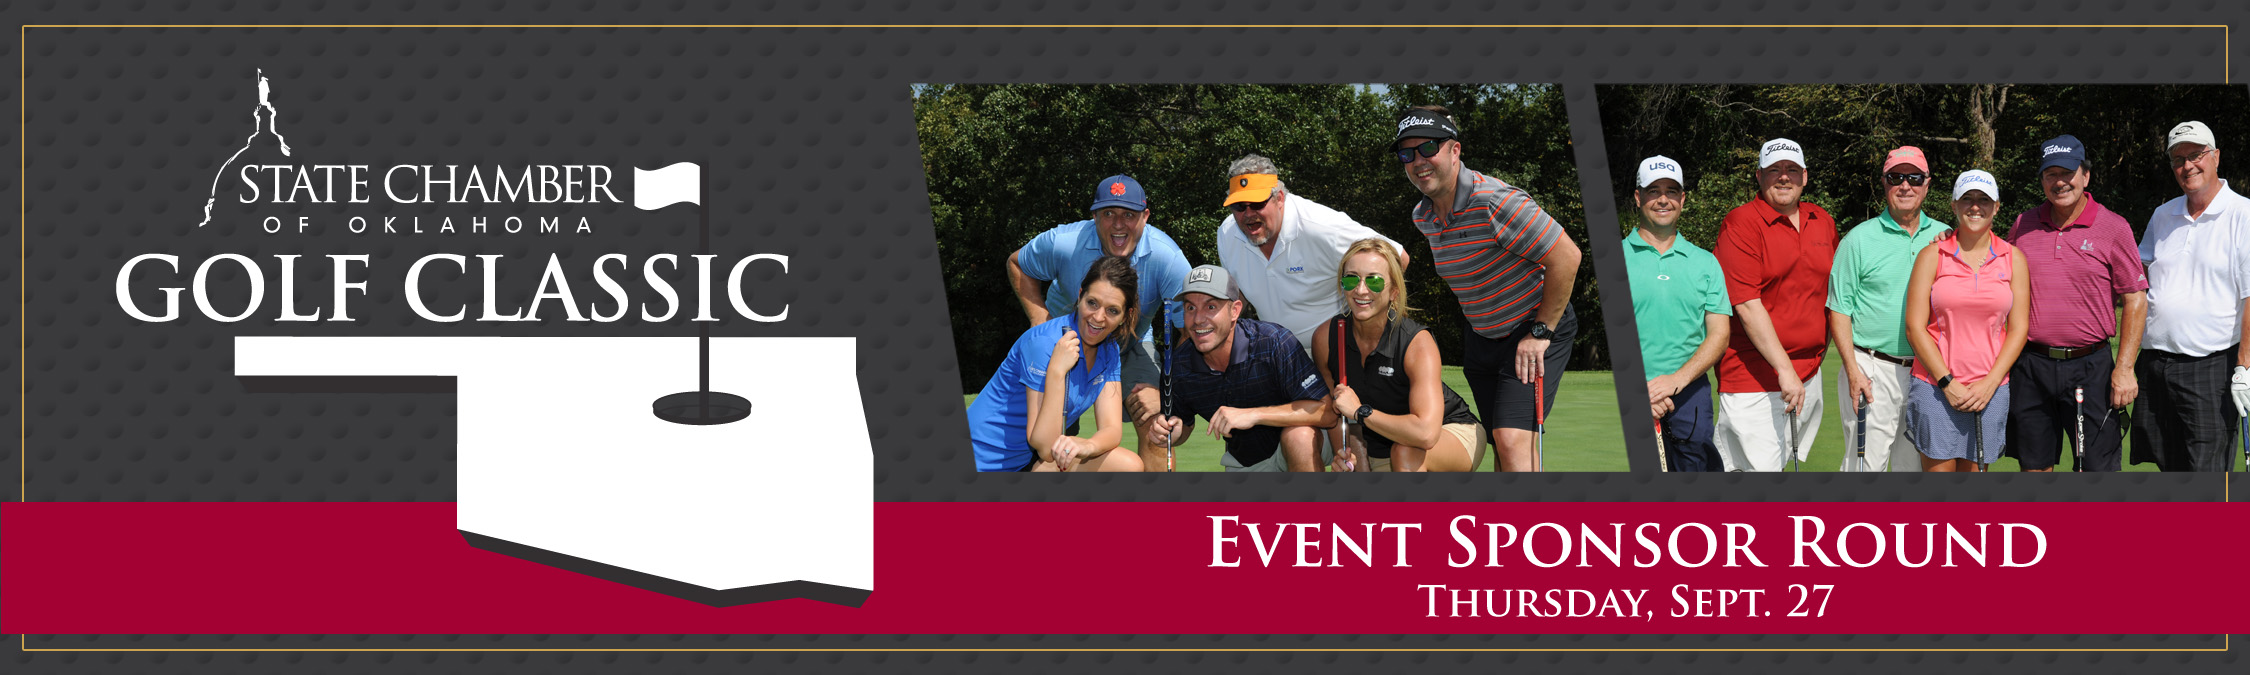 Event Sponsor Golf Classic